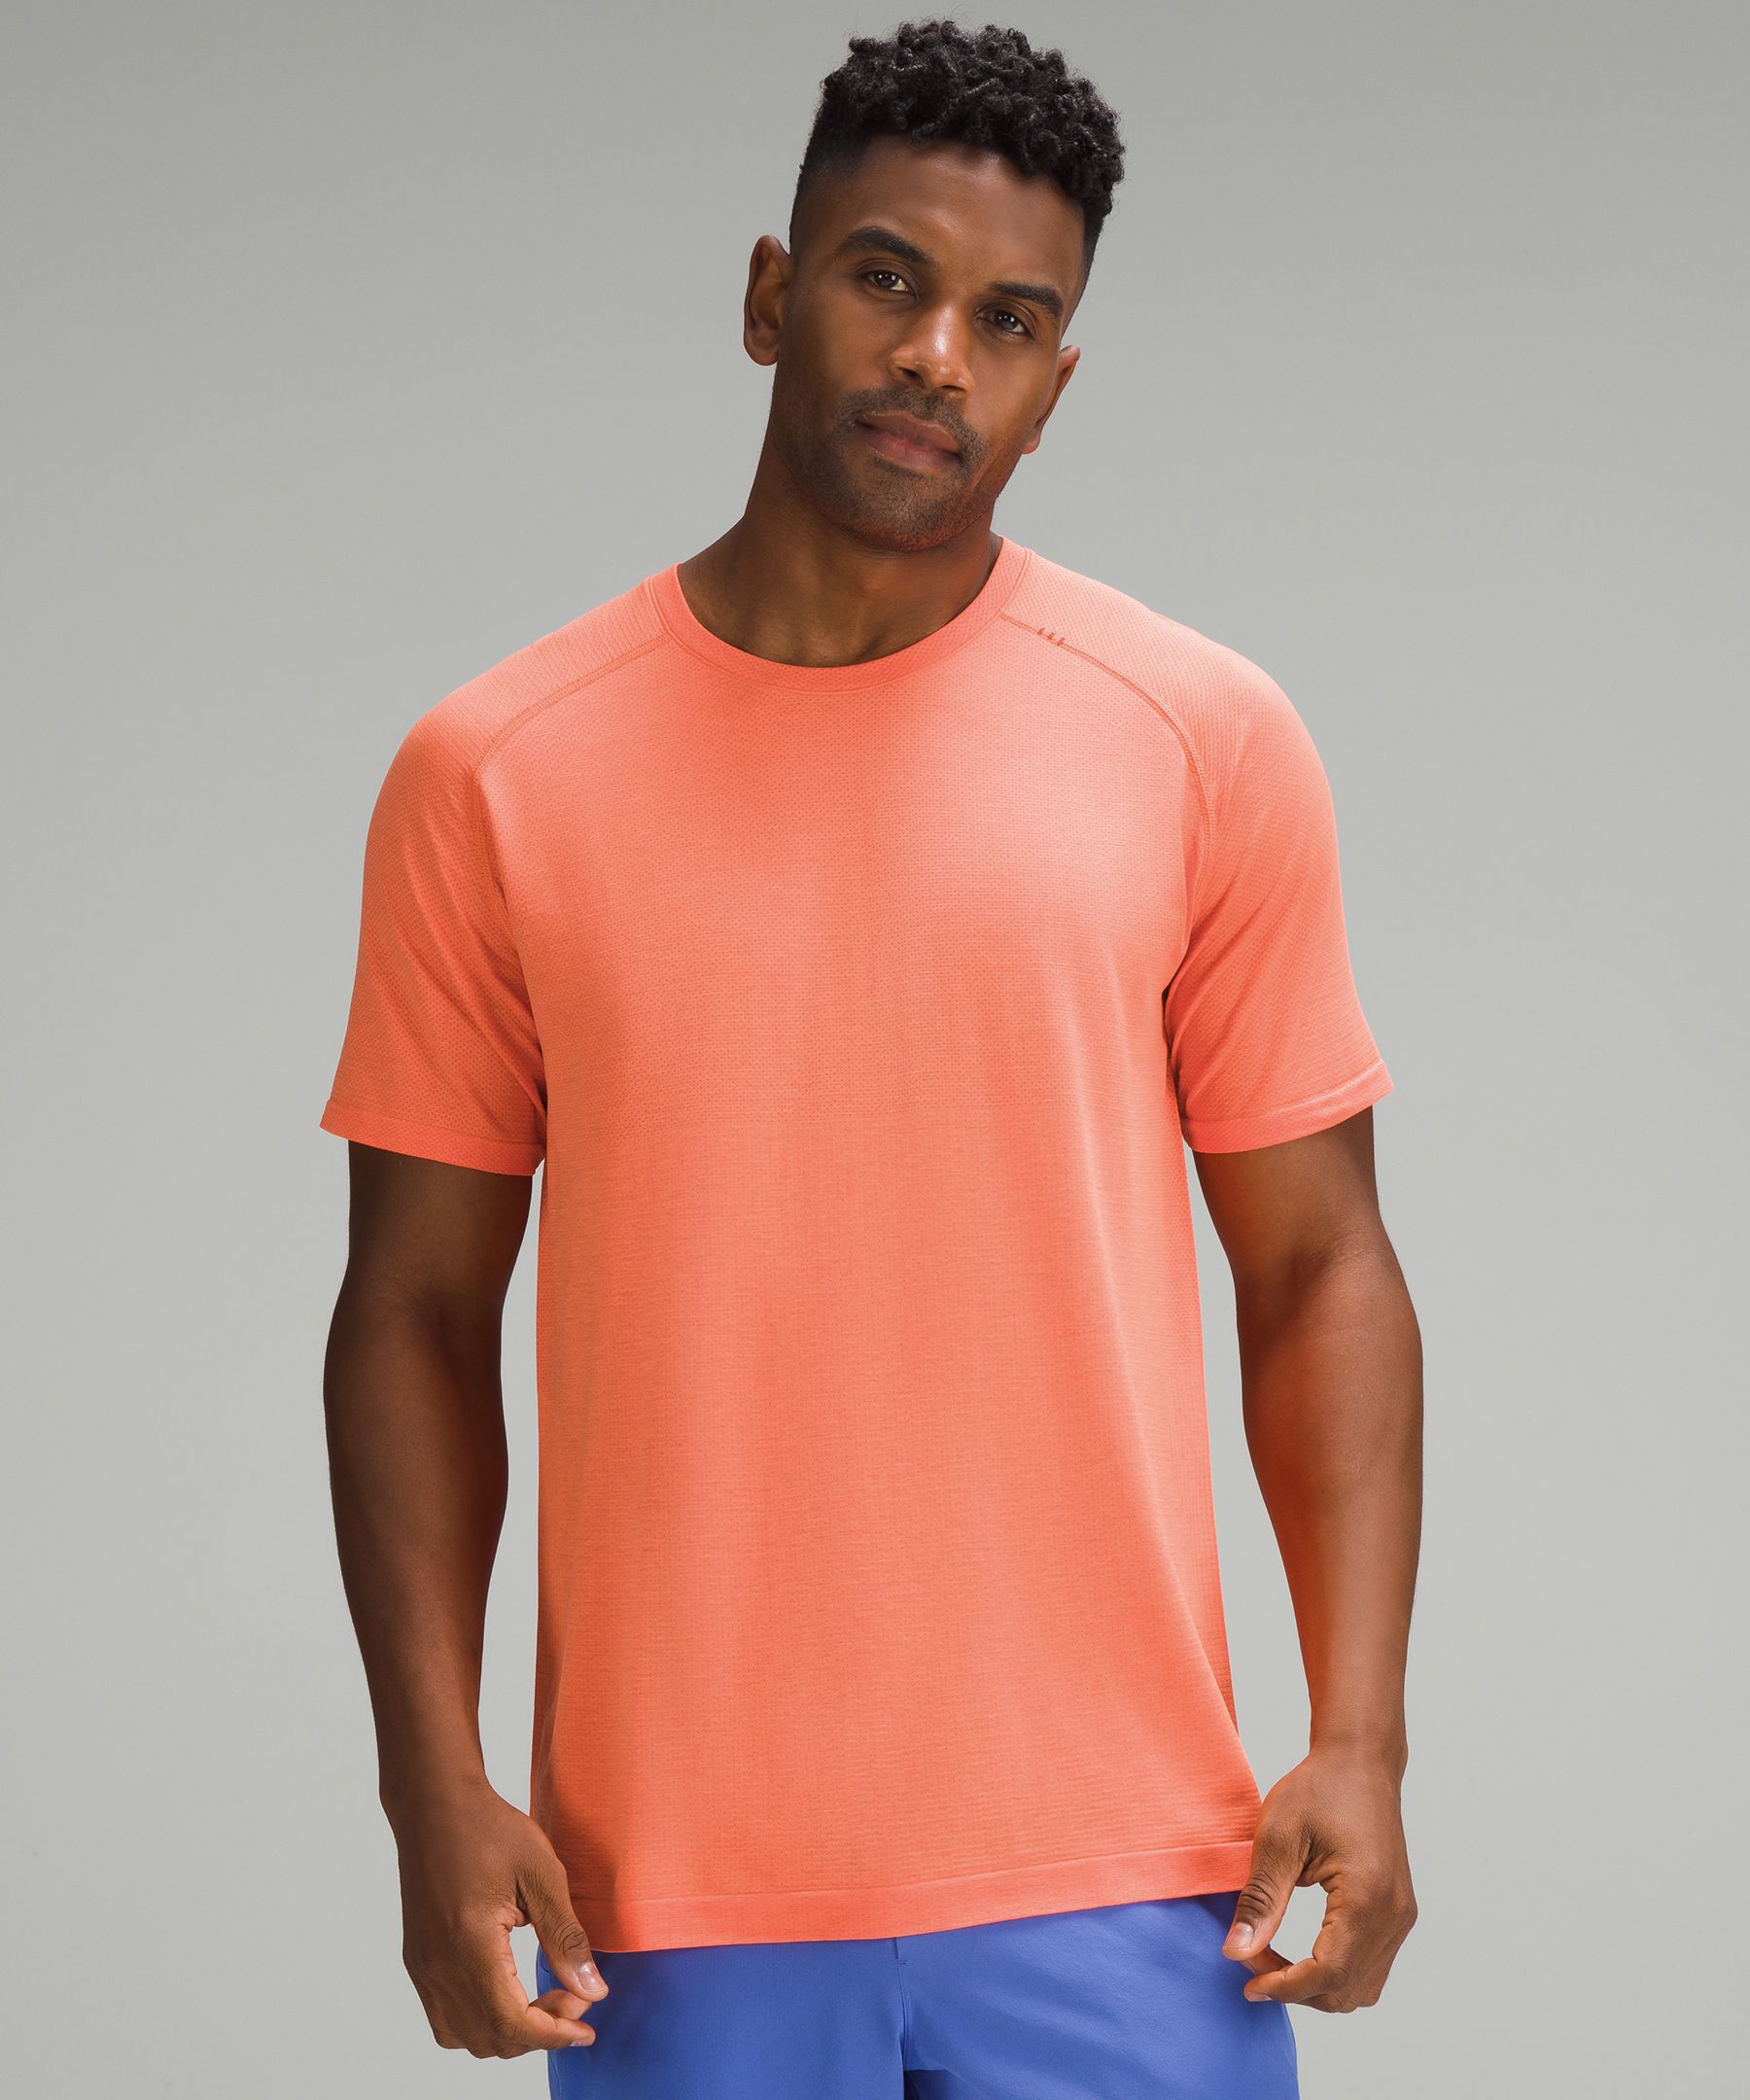 Lululemon Metal Vent Tech Short Sleeve Shirt 2.0 In Warm Coral/highlight Orange